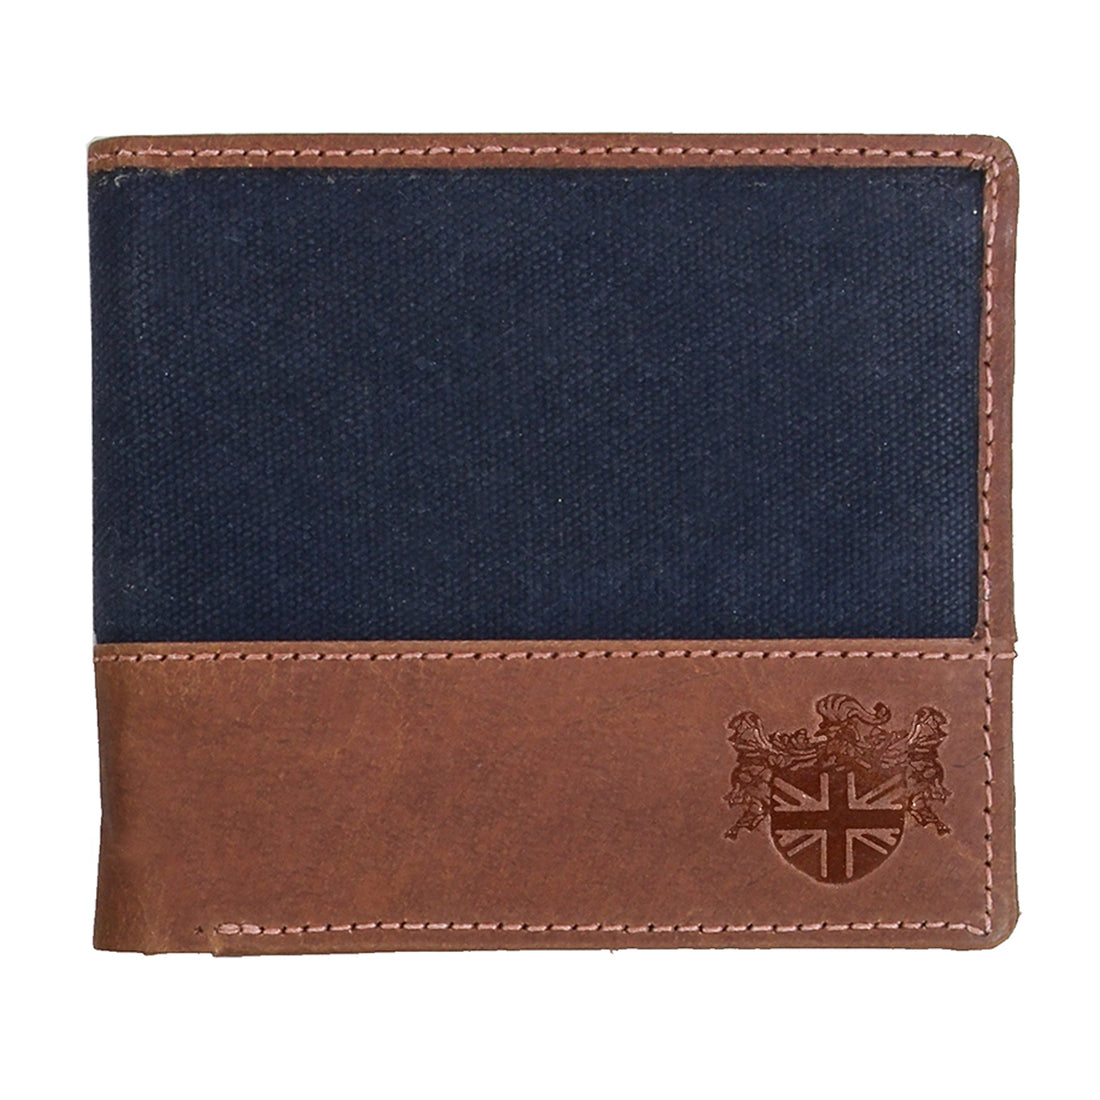 British Bag Co. Navy Wax Canvas Wallet